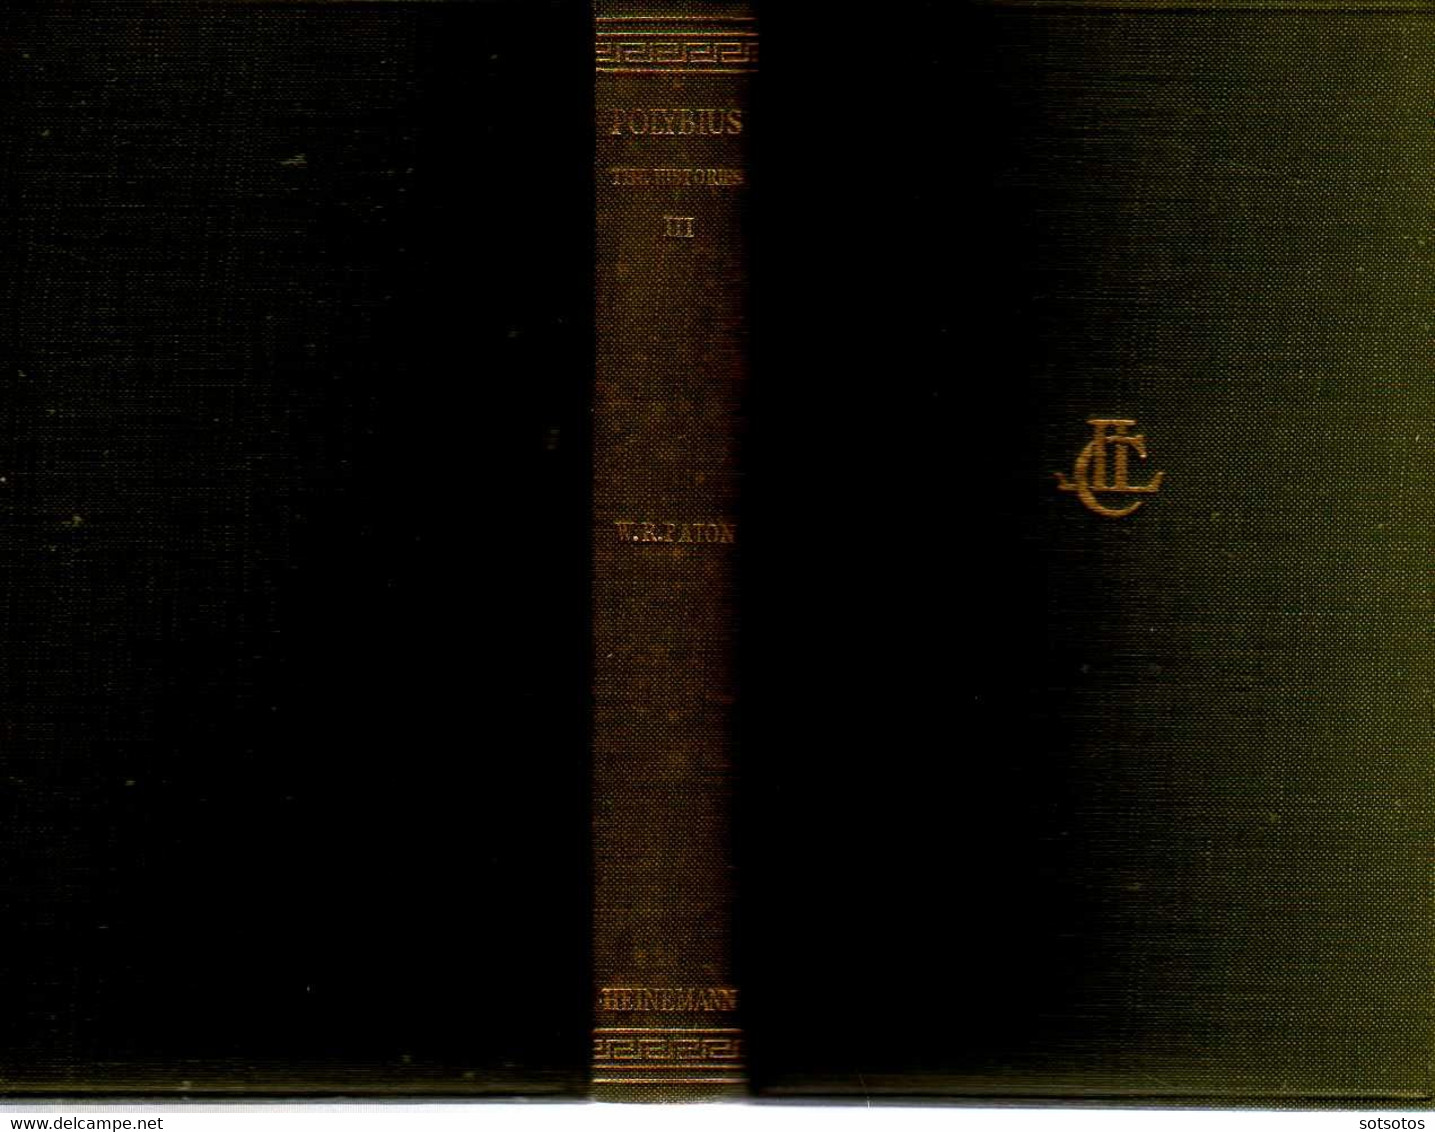 Polybius  The Histories with an English translation by W.R. Paton Ed. W.Heineman Ltd, Harvard Univ. Press MCMLIV (1954)